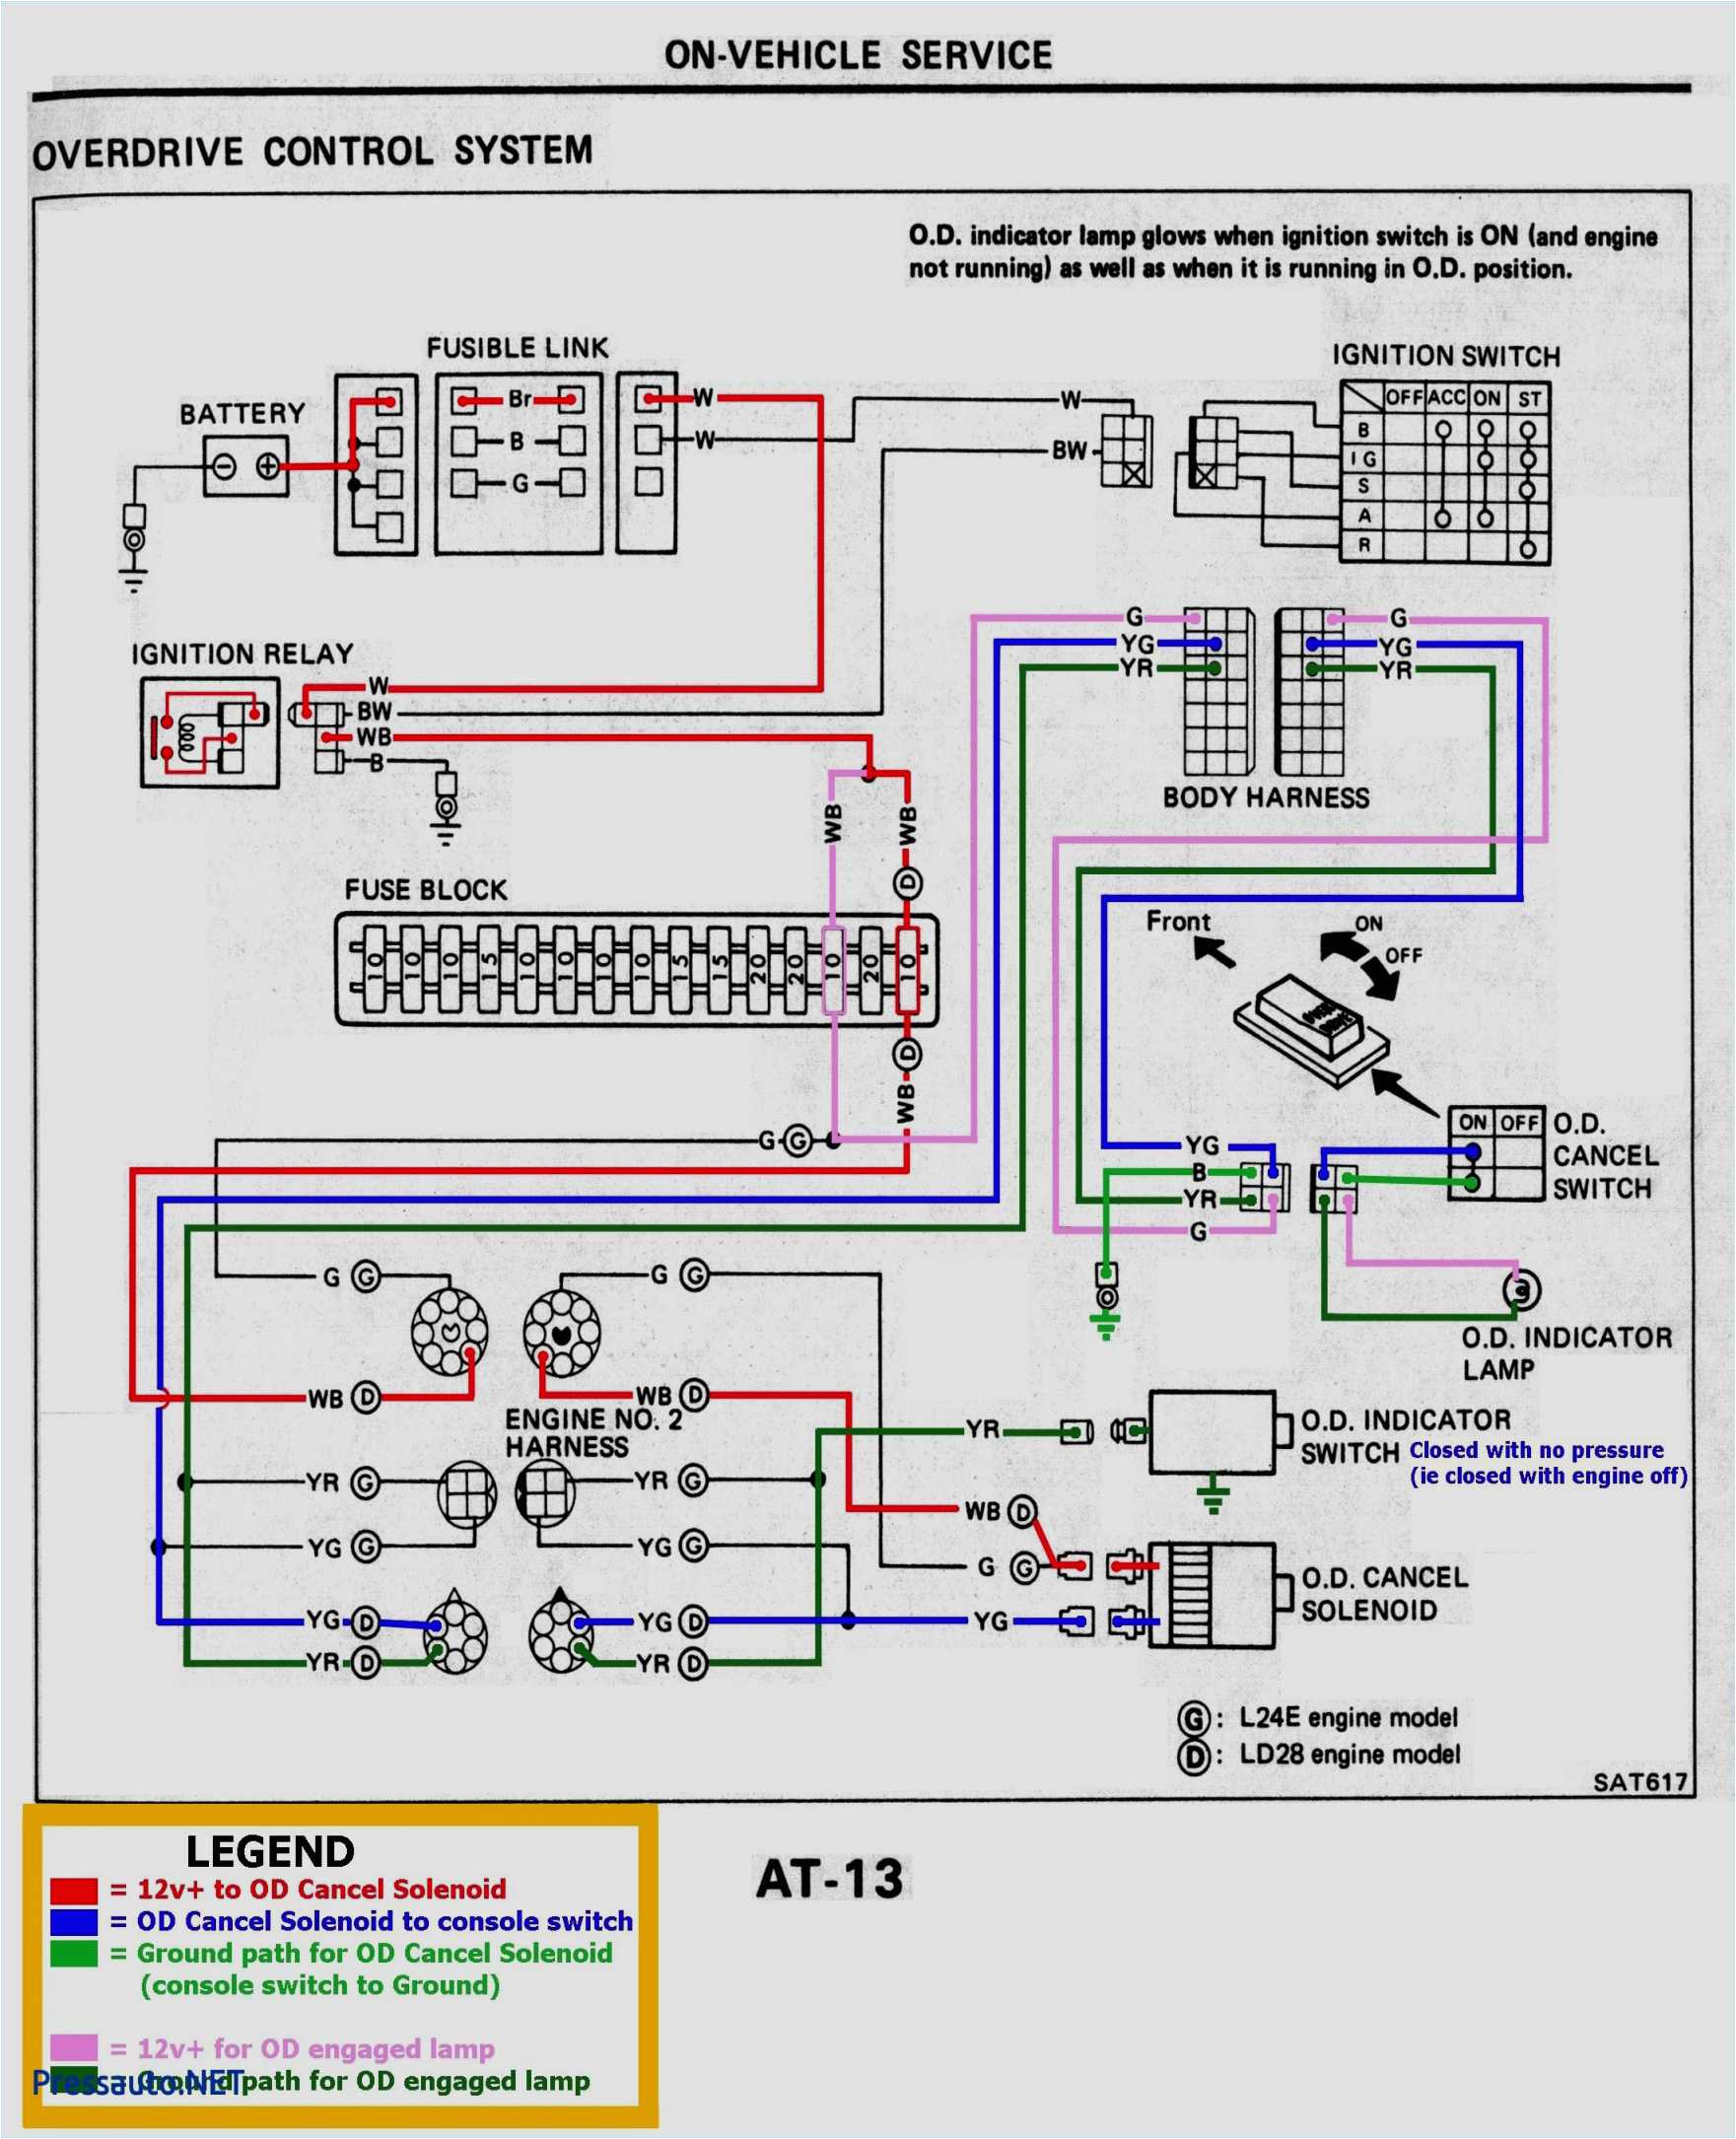 2000 ford f150 stereo wiring diagram 1993 mazda miata radio wiring clean wiring diagrams e280a2 of 2000 ford f150 stereo wiring diagram jpg